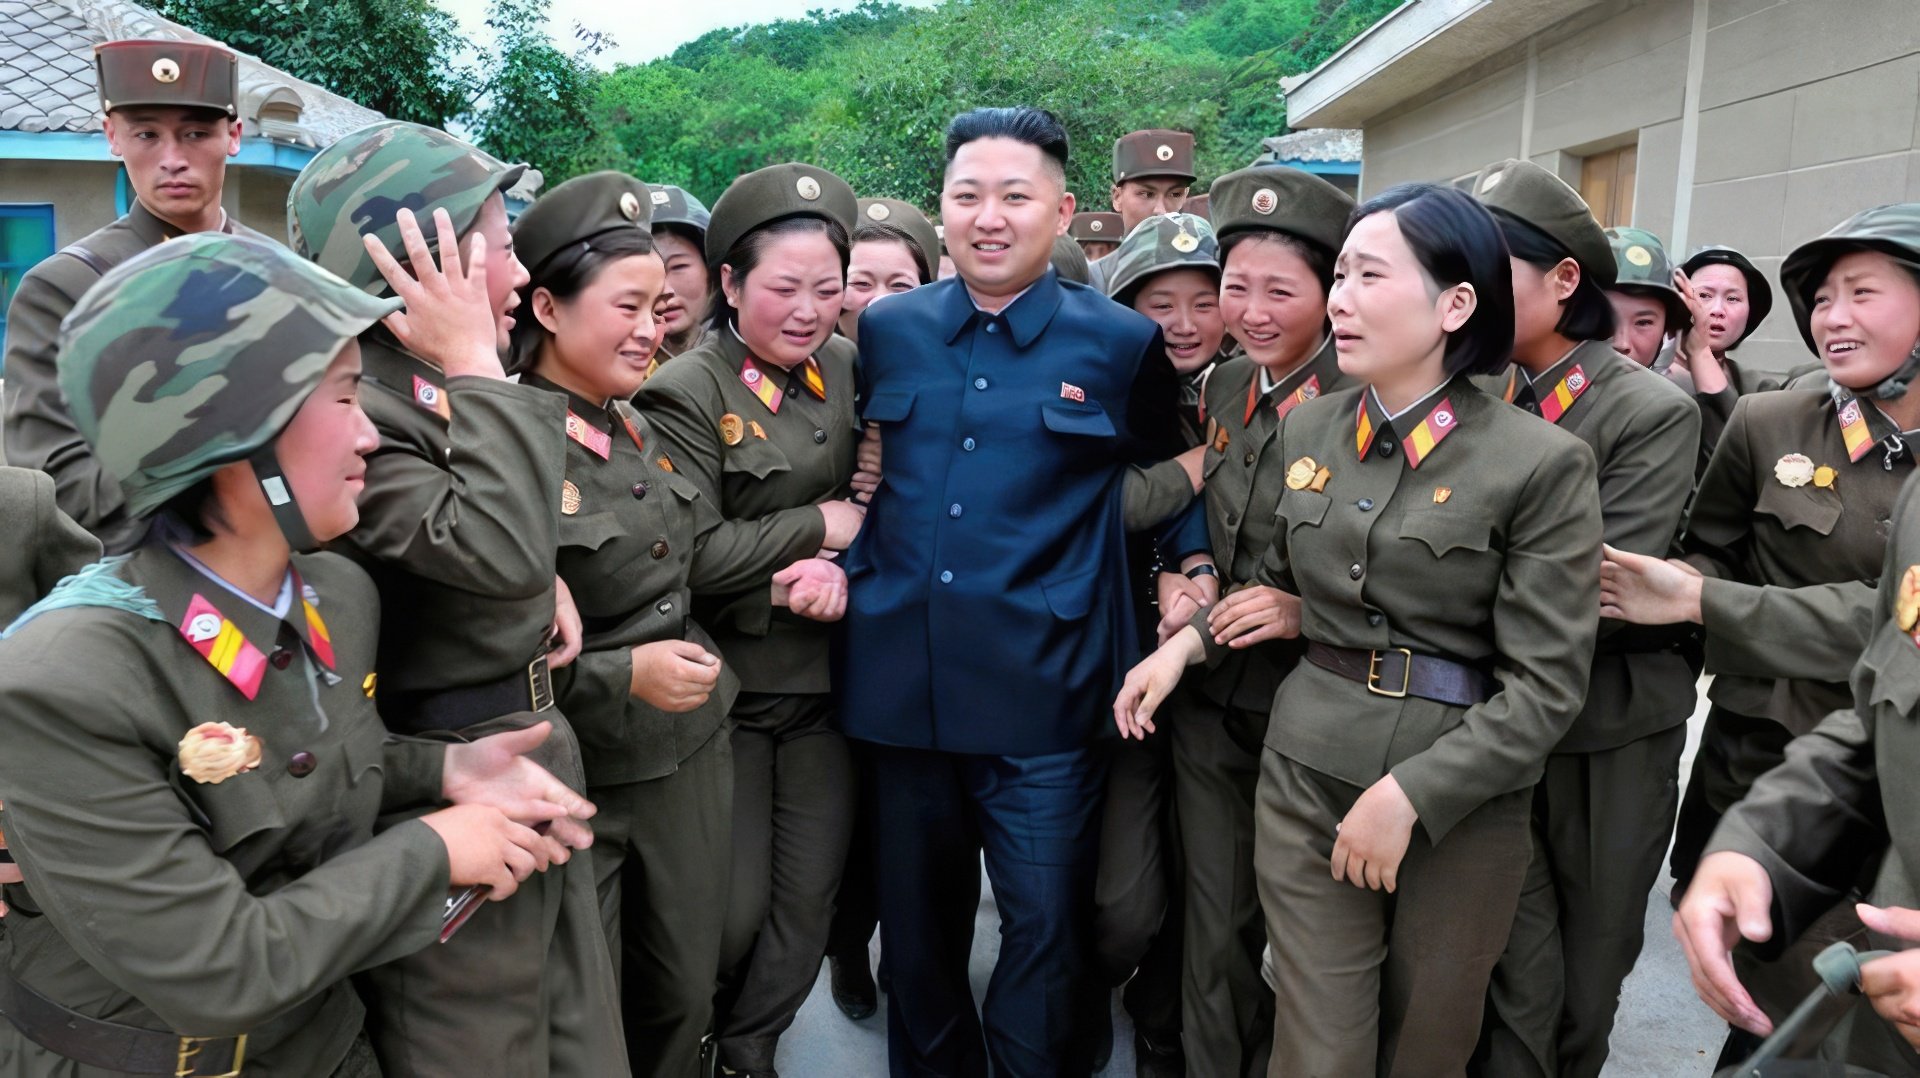 Kim Jong-un with military women in DPRK